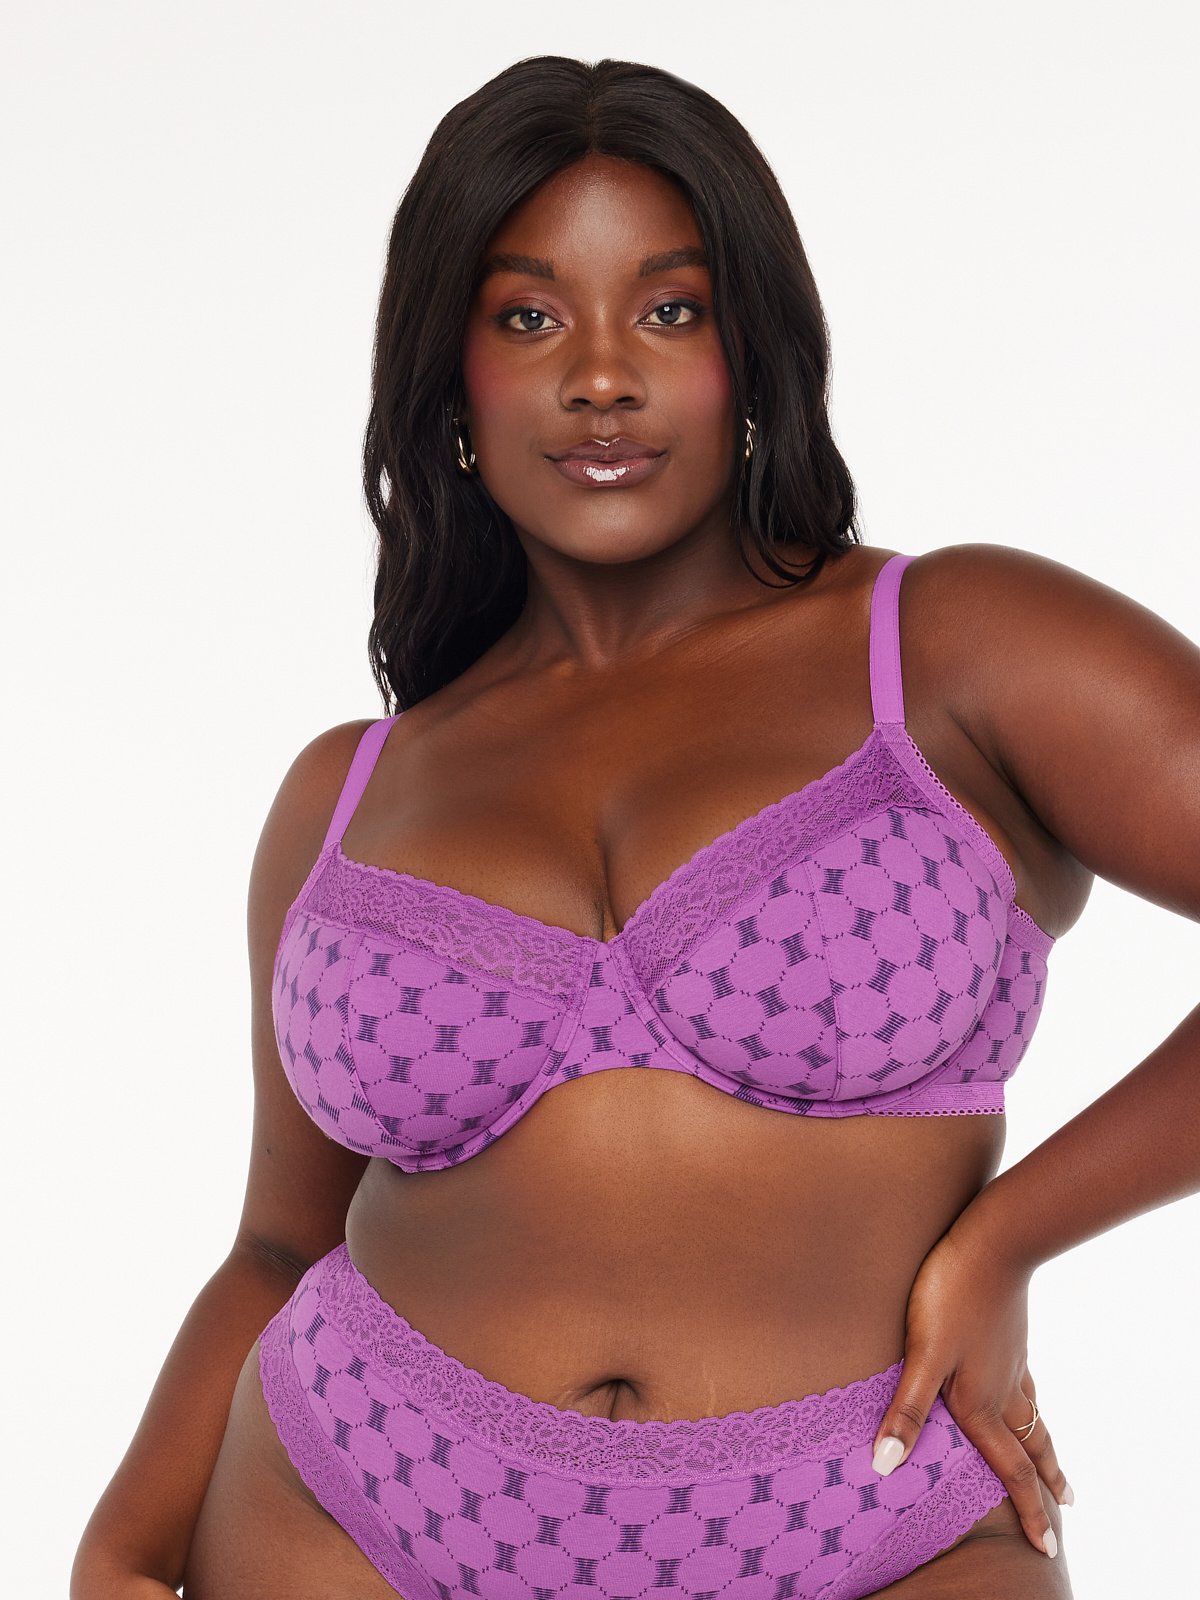 Avenue  Women's Plus Size Fashion Cotton Bra - Rose Violet - 48ddd : Target